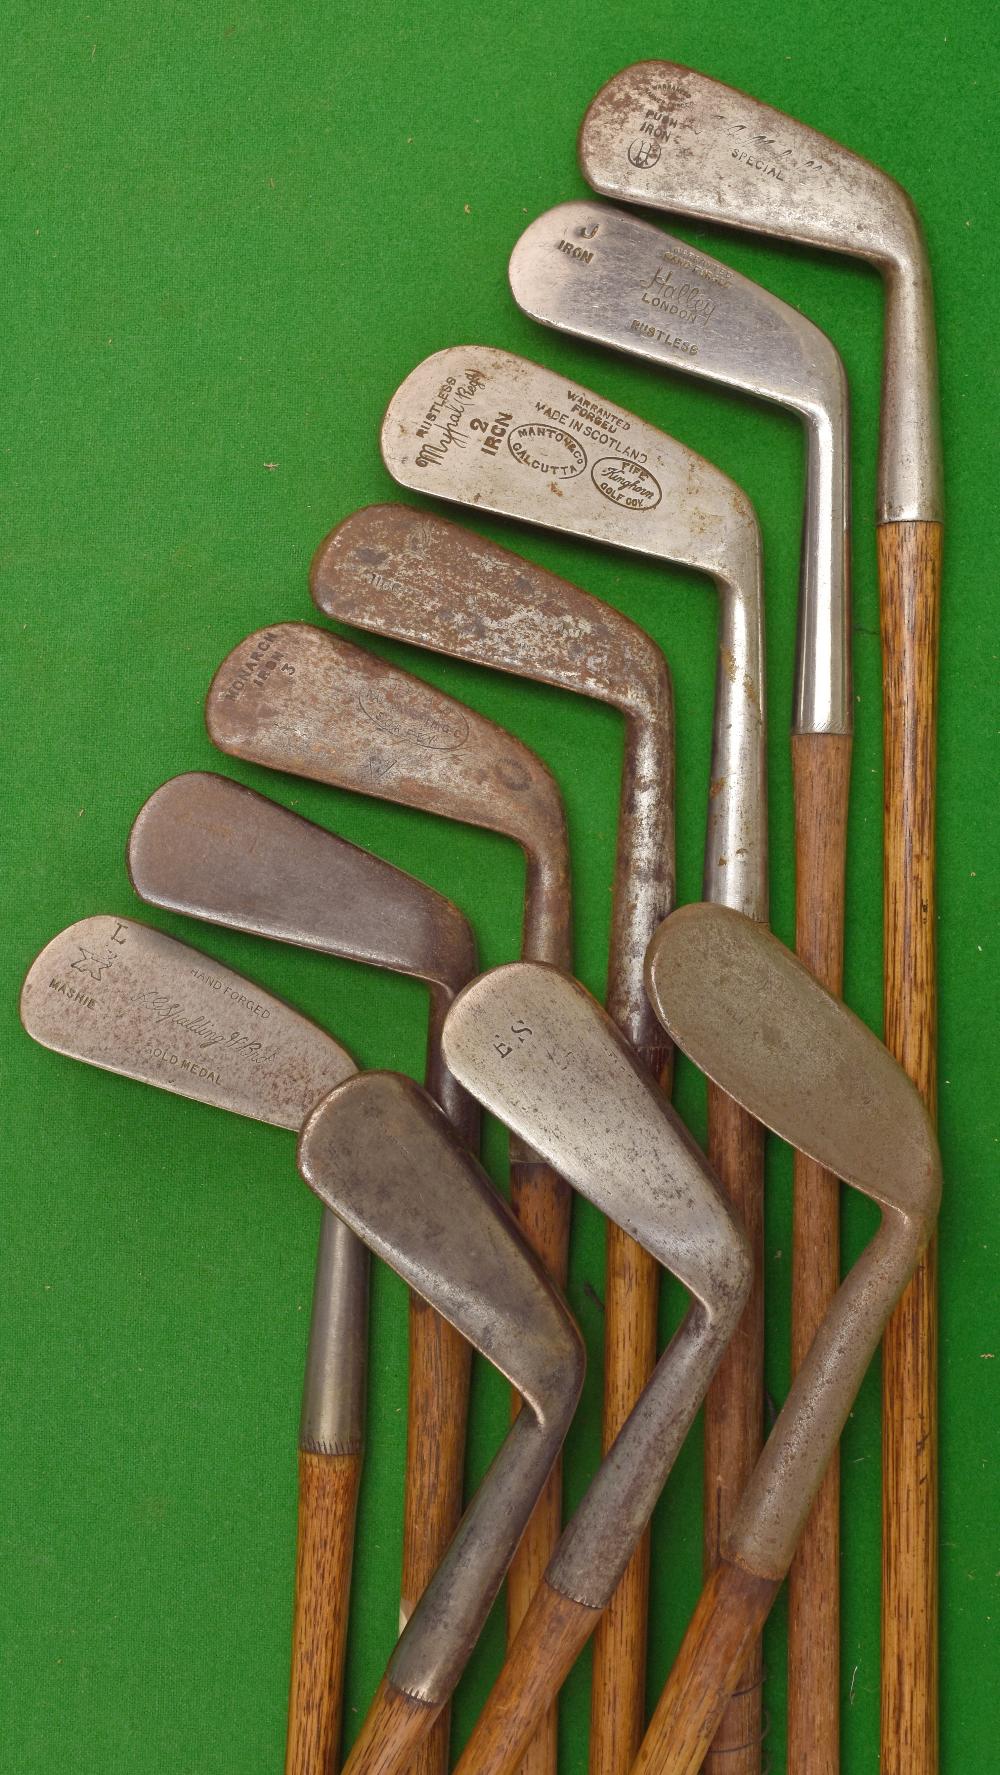 Mixture of various irons (10) – Halley’s Push Iron, Jigger, 2x Lofting Irons, Spalding Gold Medal